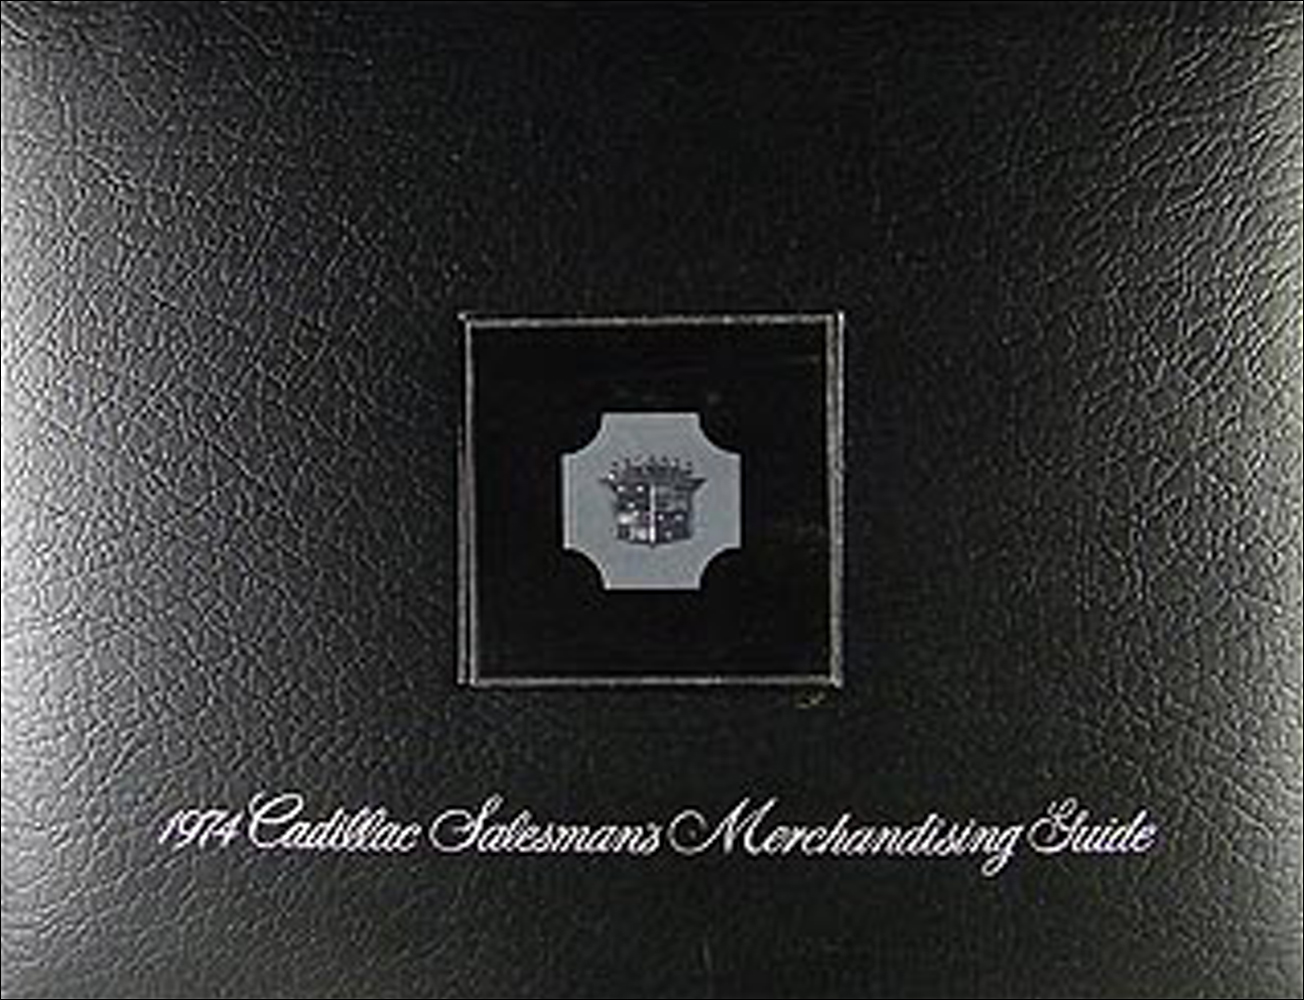 1974 Cadillac Merchandising Guide